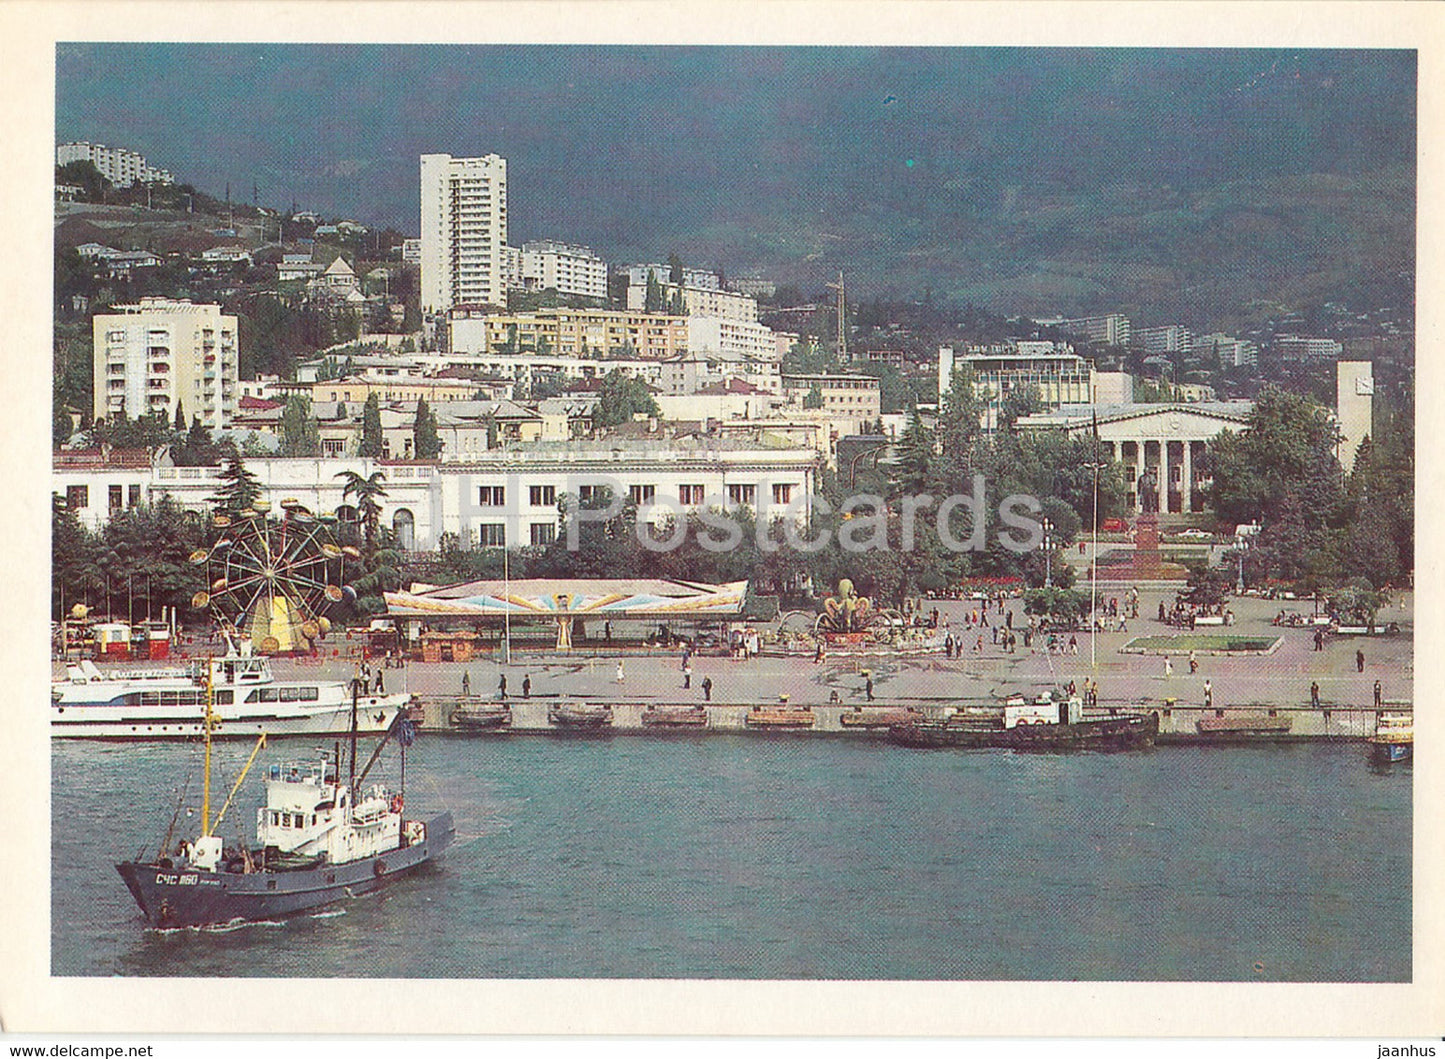 Yalta - view at the city - boat - ship - Crimea - 1981 - Ukraine USSR - unused - JH Postcards